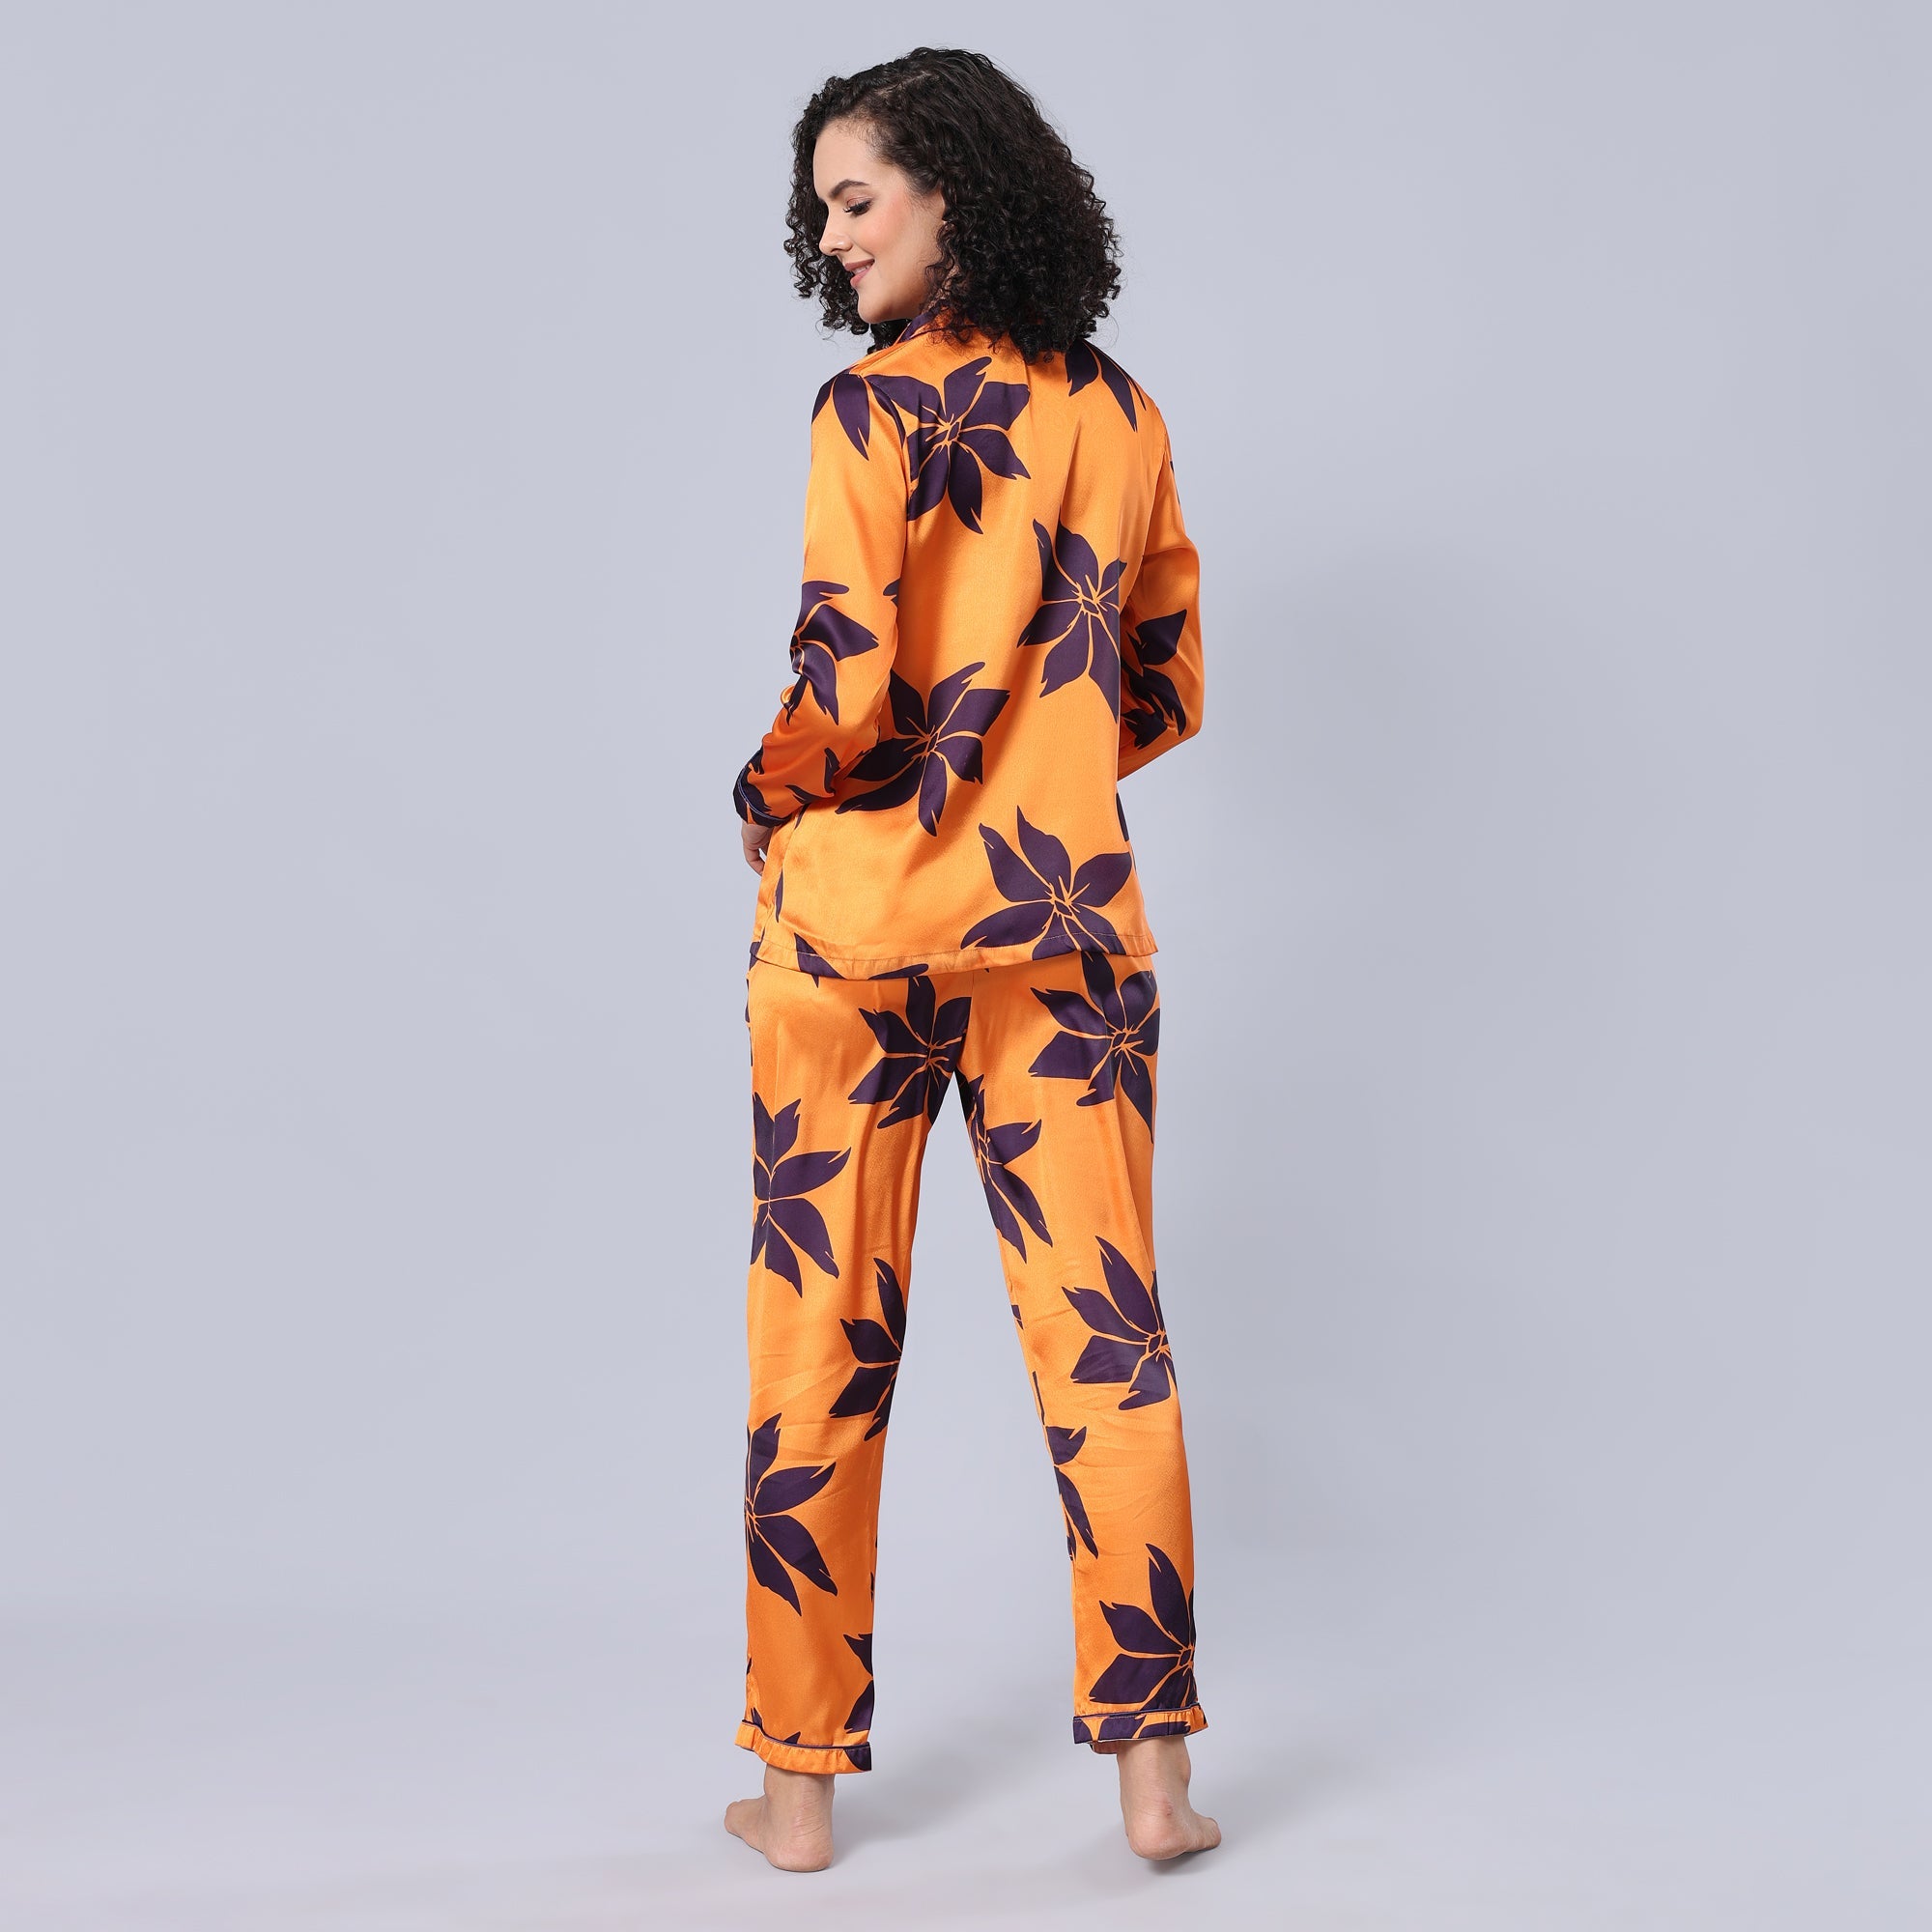 evolove Women Satin Short Sleeve Top and Pyjama Nightsuit Set